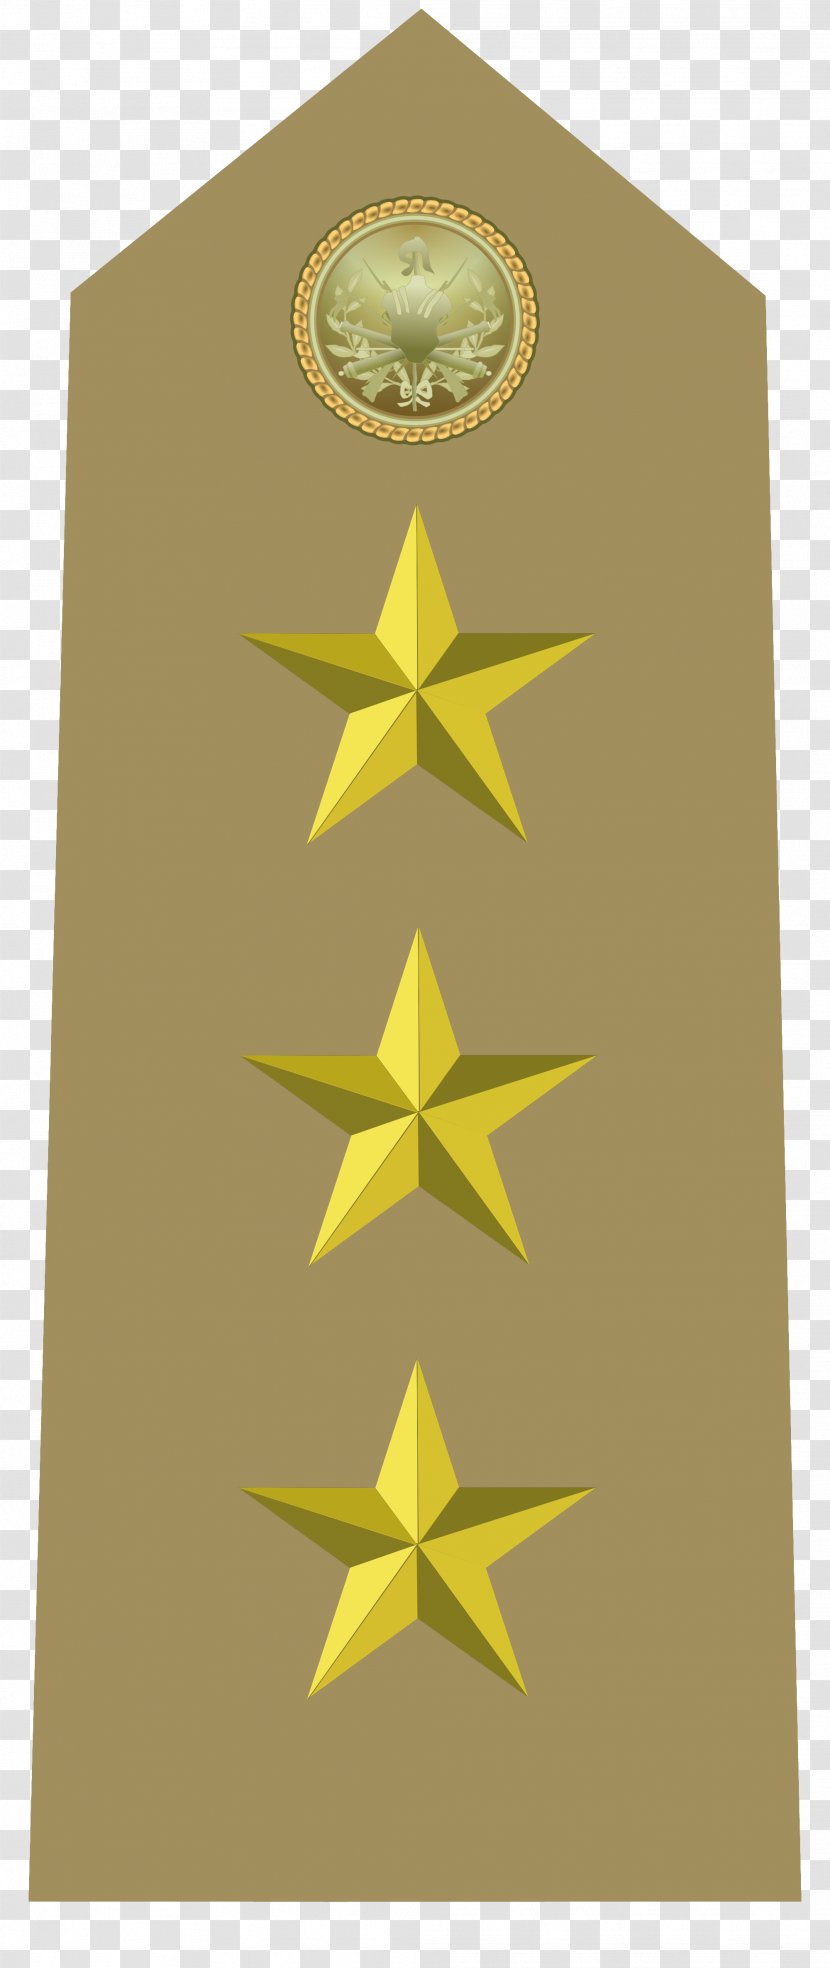 Royal Italian Army Sardinian Gradi Del Regio Esercito Uniform - Korer Military Insignia Transparent PNG